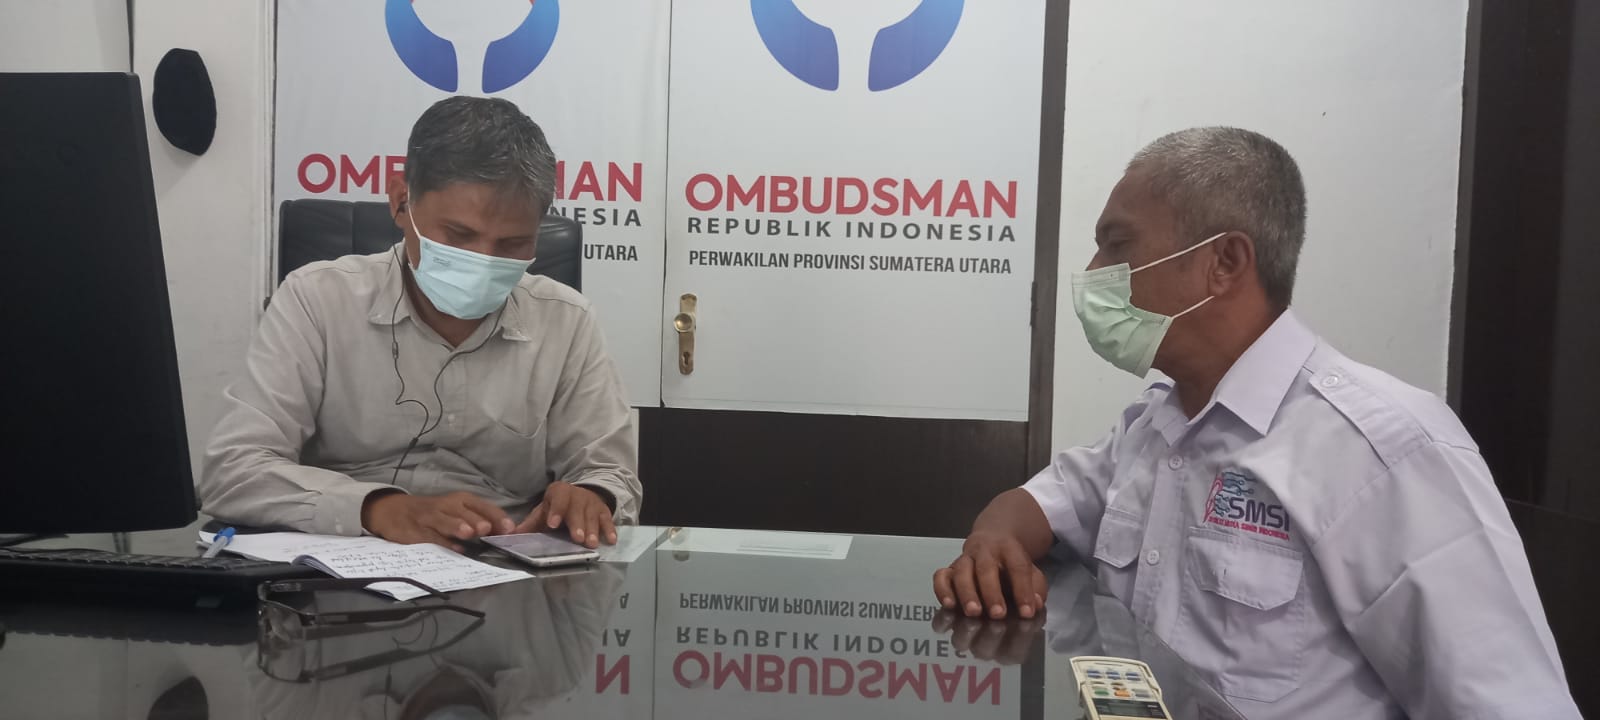 Ombudsman : Manajemen Instalasi Pembibitan Sapi di Palas Harus Transparan